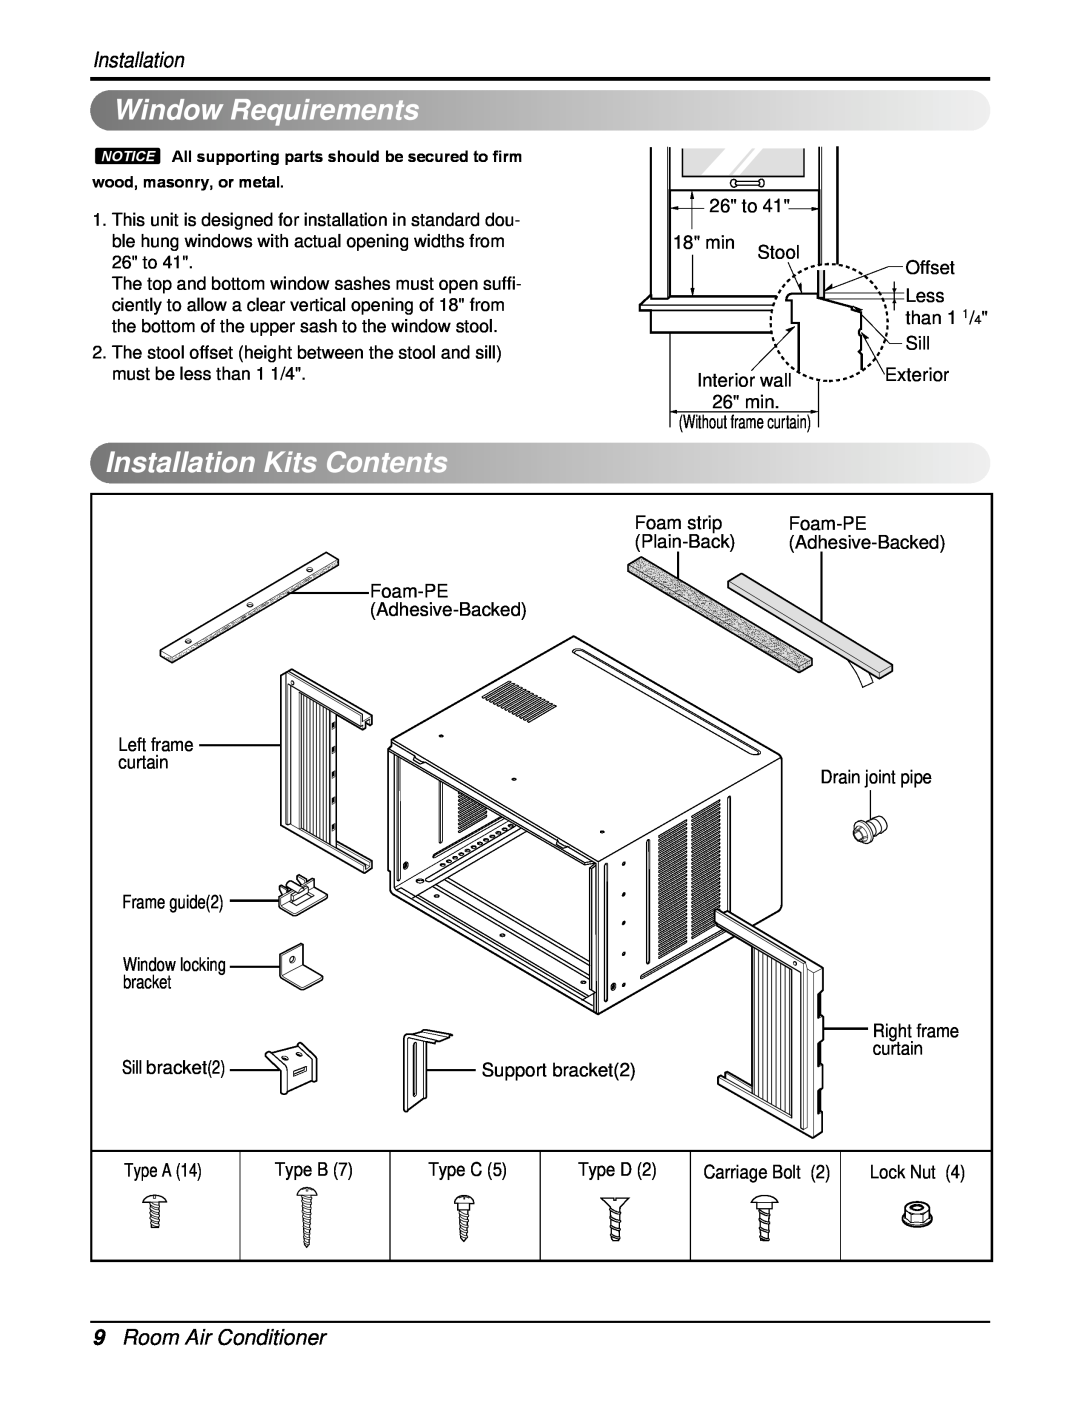 Heat Controller RAD-183A, RAD-243A service manual Window Requirements, InstallationKits Contents, 9Room Air Conditioner 